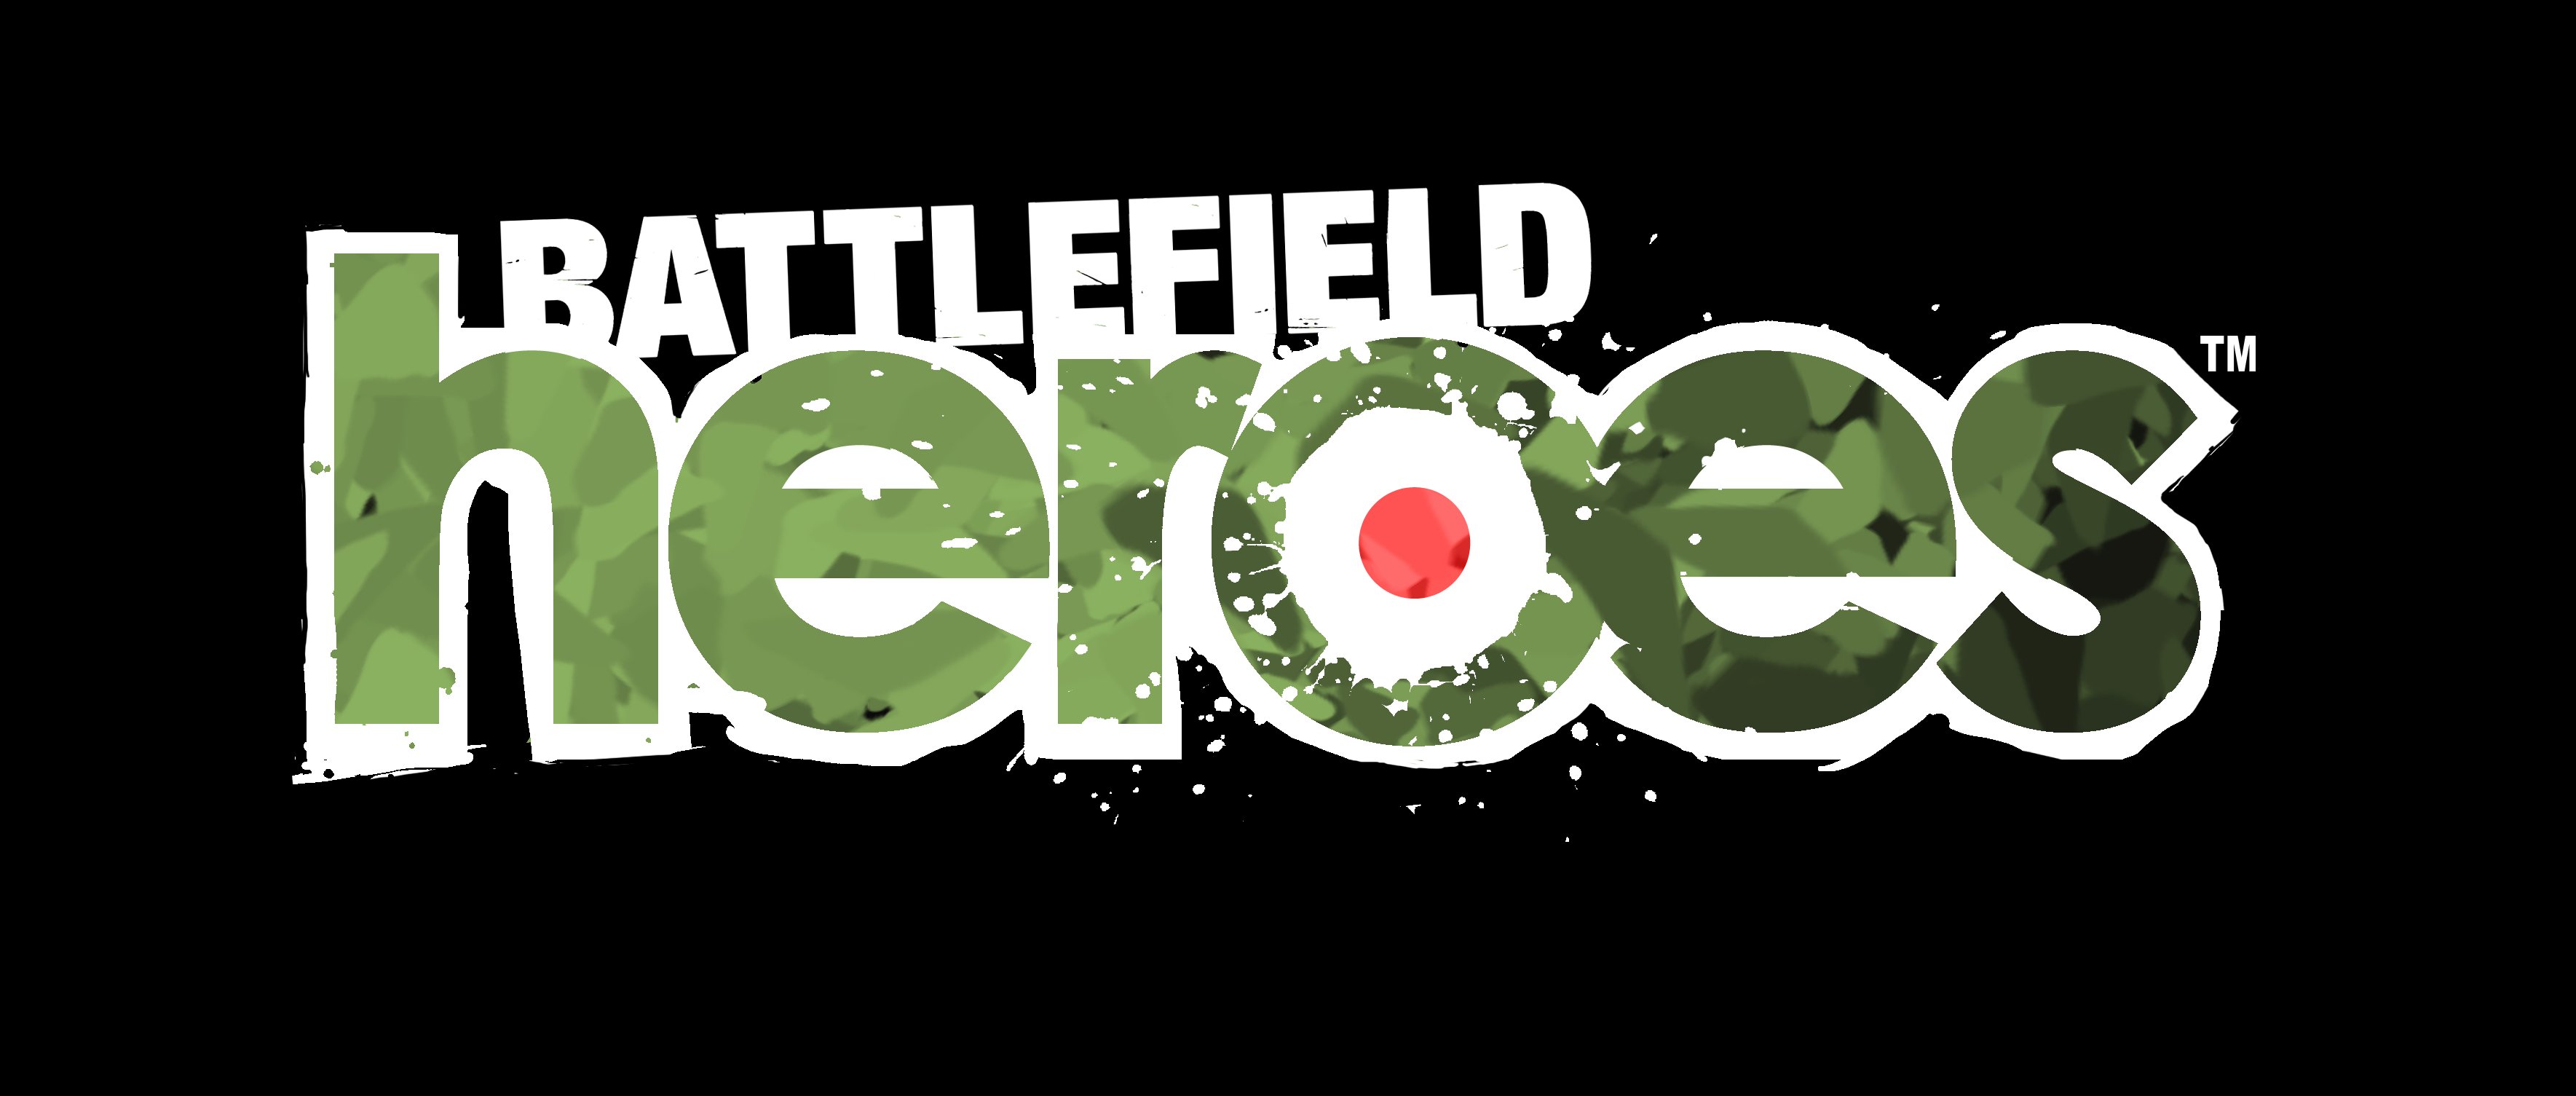 battlefield, Heroes, Military, Tps, Shooter, Action, War, 1bheroes, Sci fi, Warrior Wallpaper